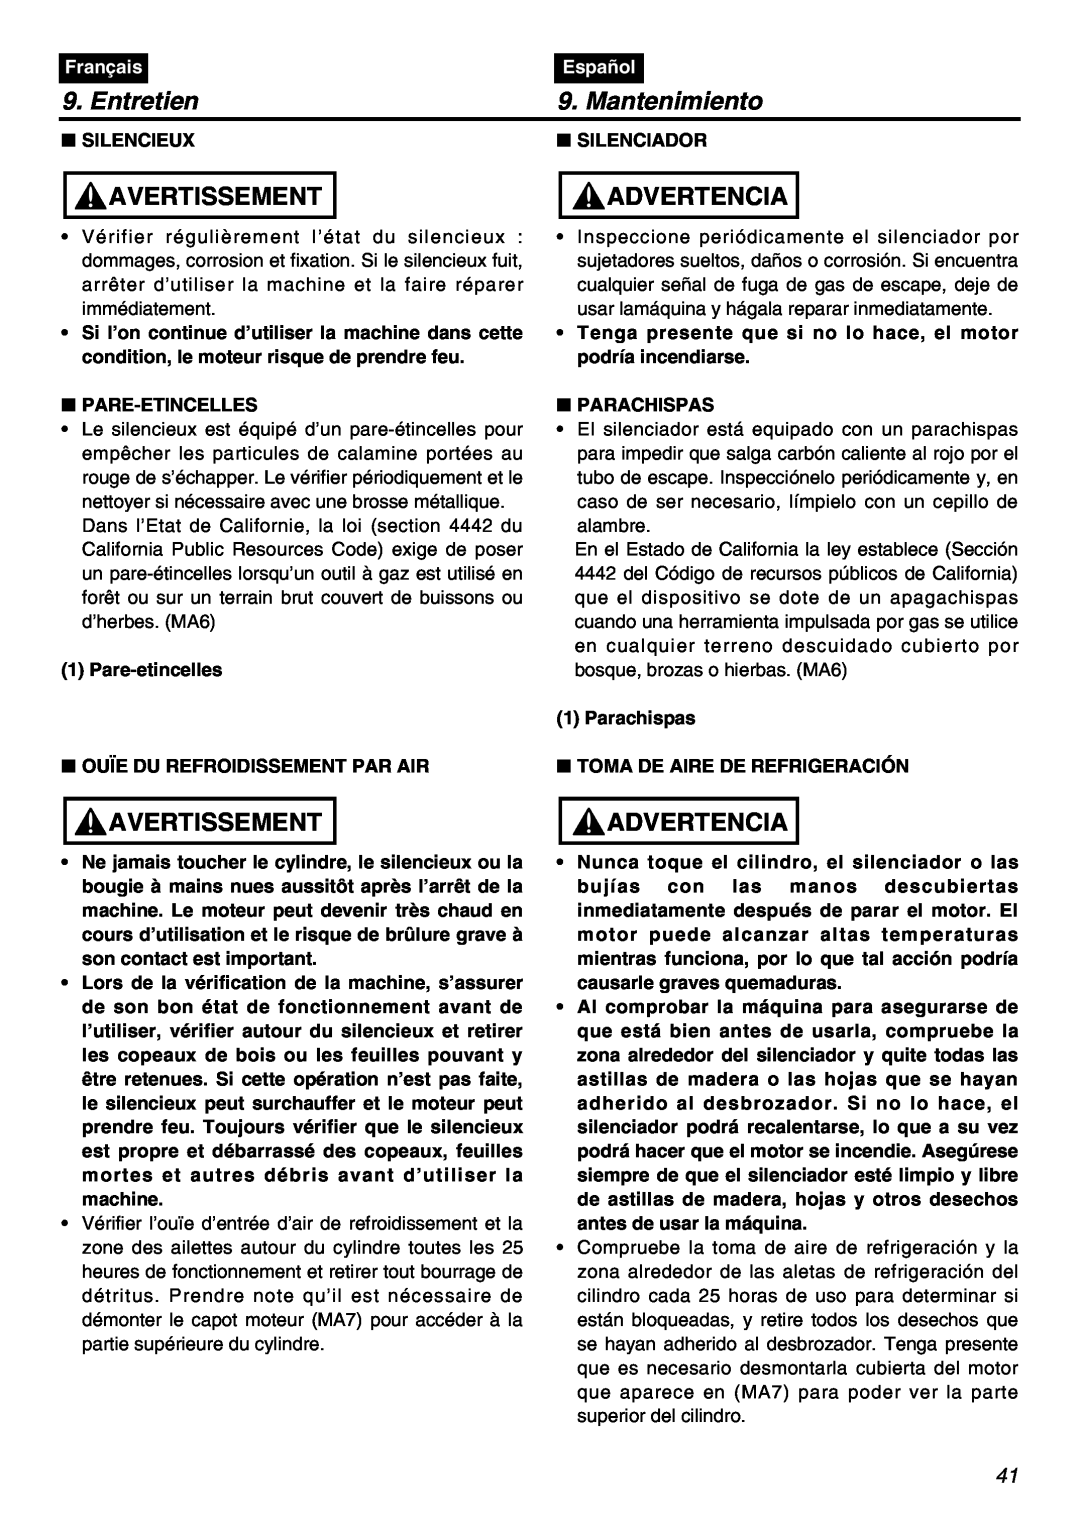 RedMax SRTZ2401F manual Entretien, Mantenimiento, Avertissement, Advertencia, Français, Español, Silencieux, Silenciador 